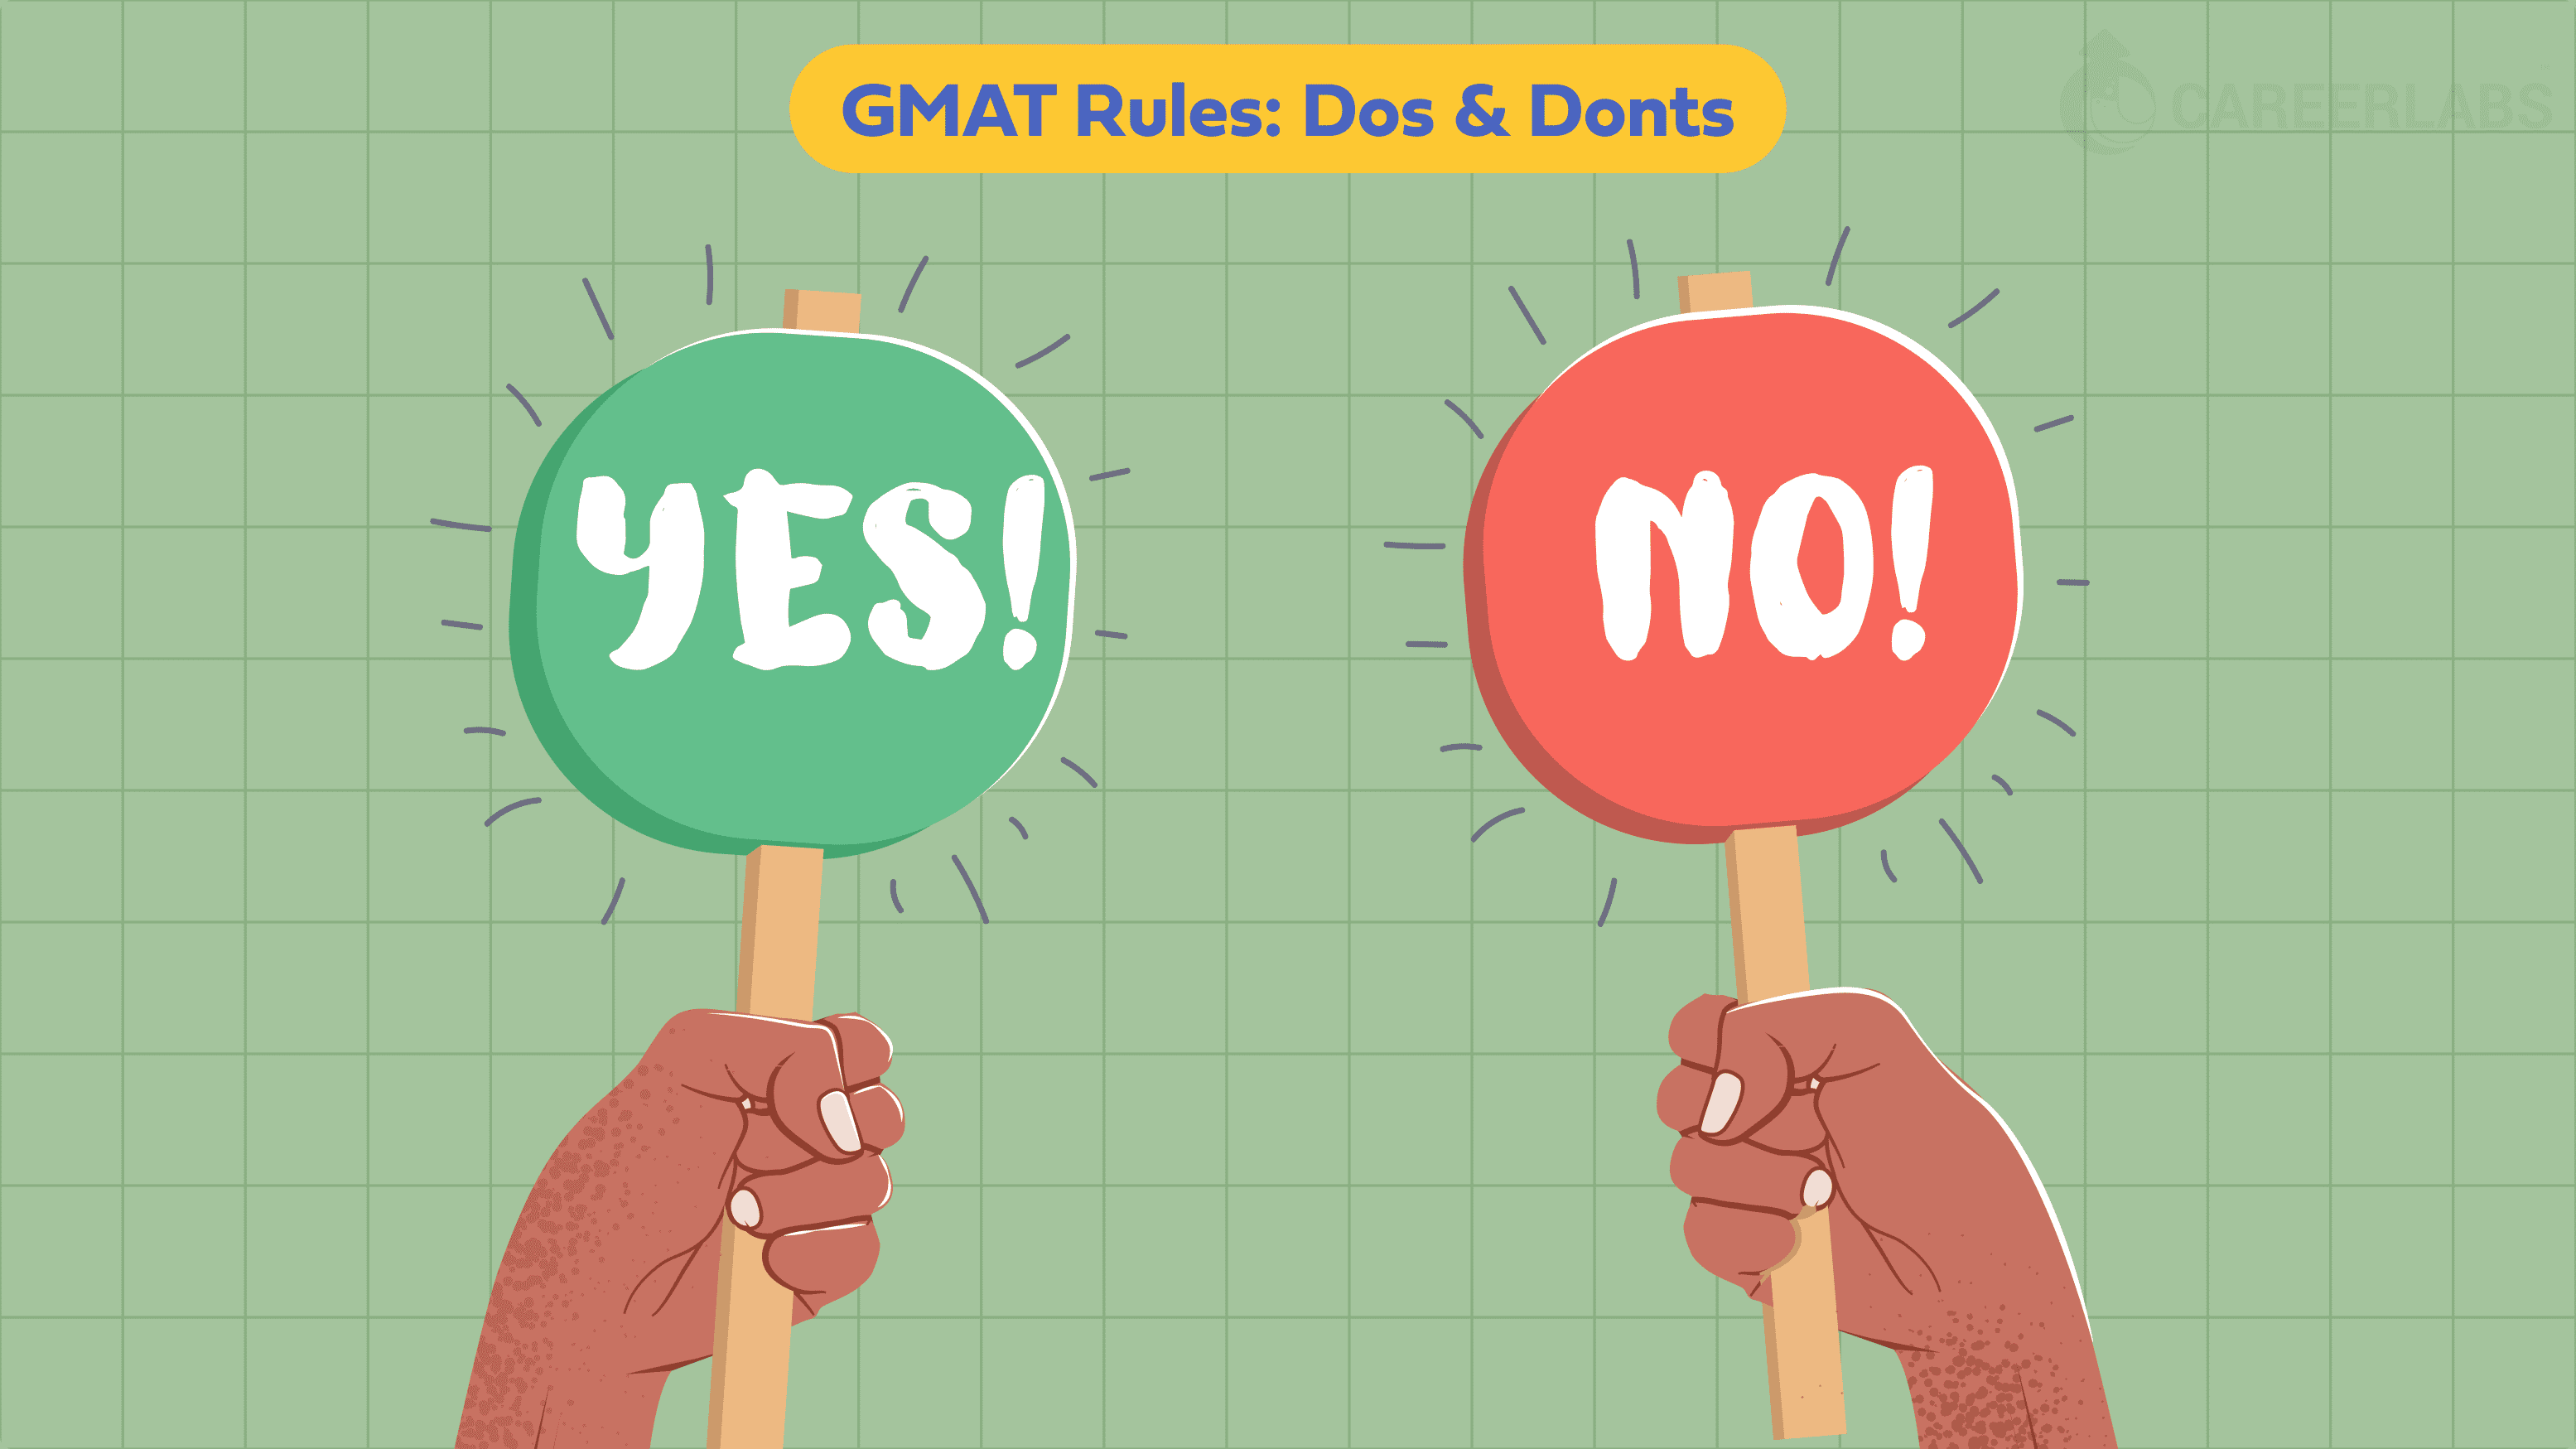 GMAT Rules & Regulations: Dos and Don’ts